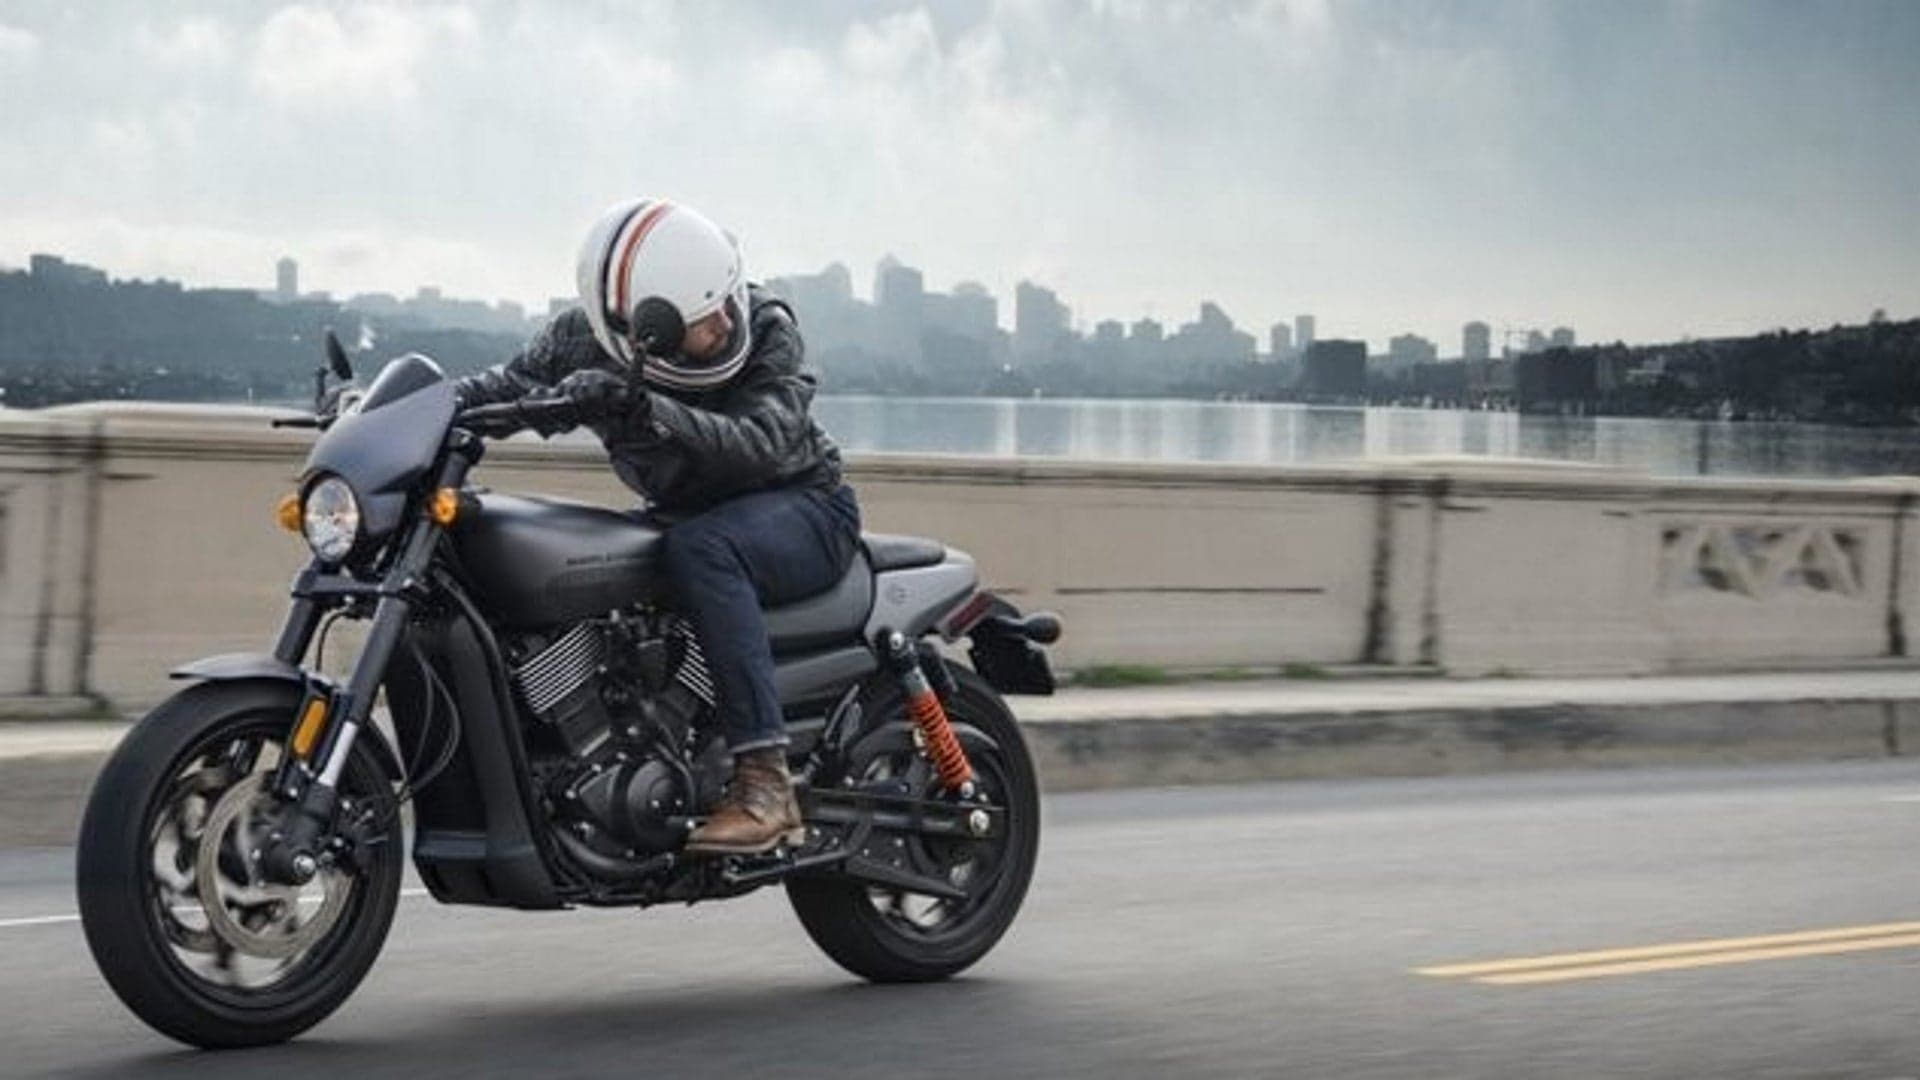 Harley-Davidson Shows off New Retro-Inspired Helmets